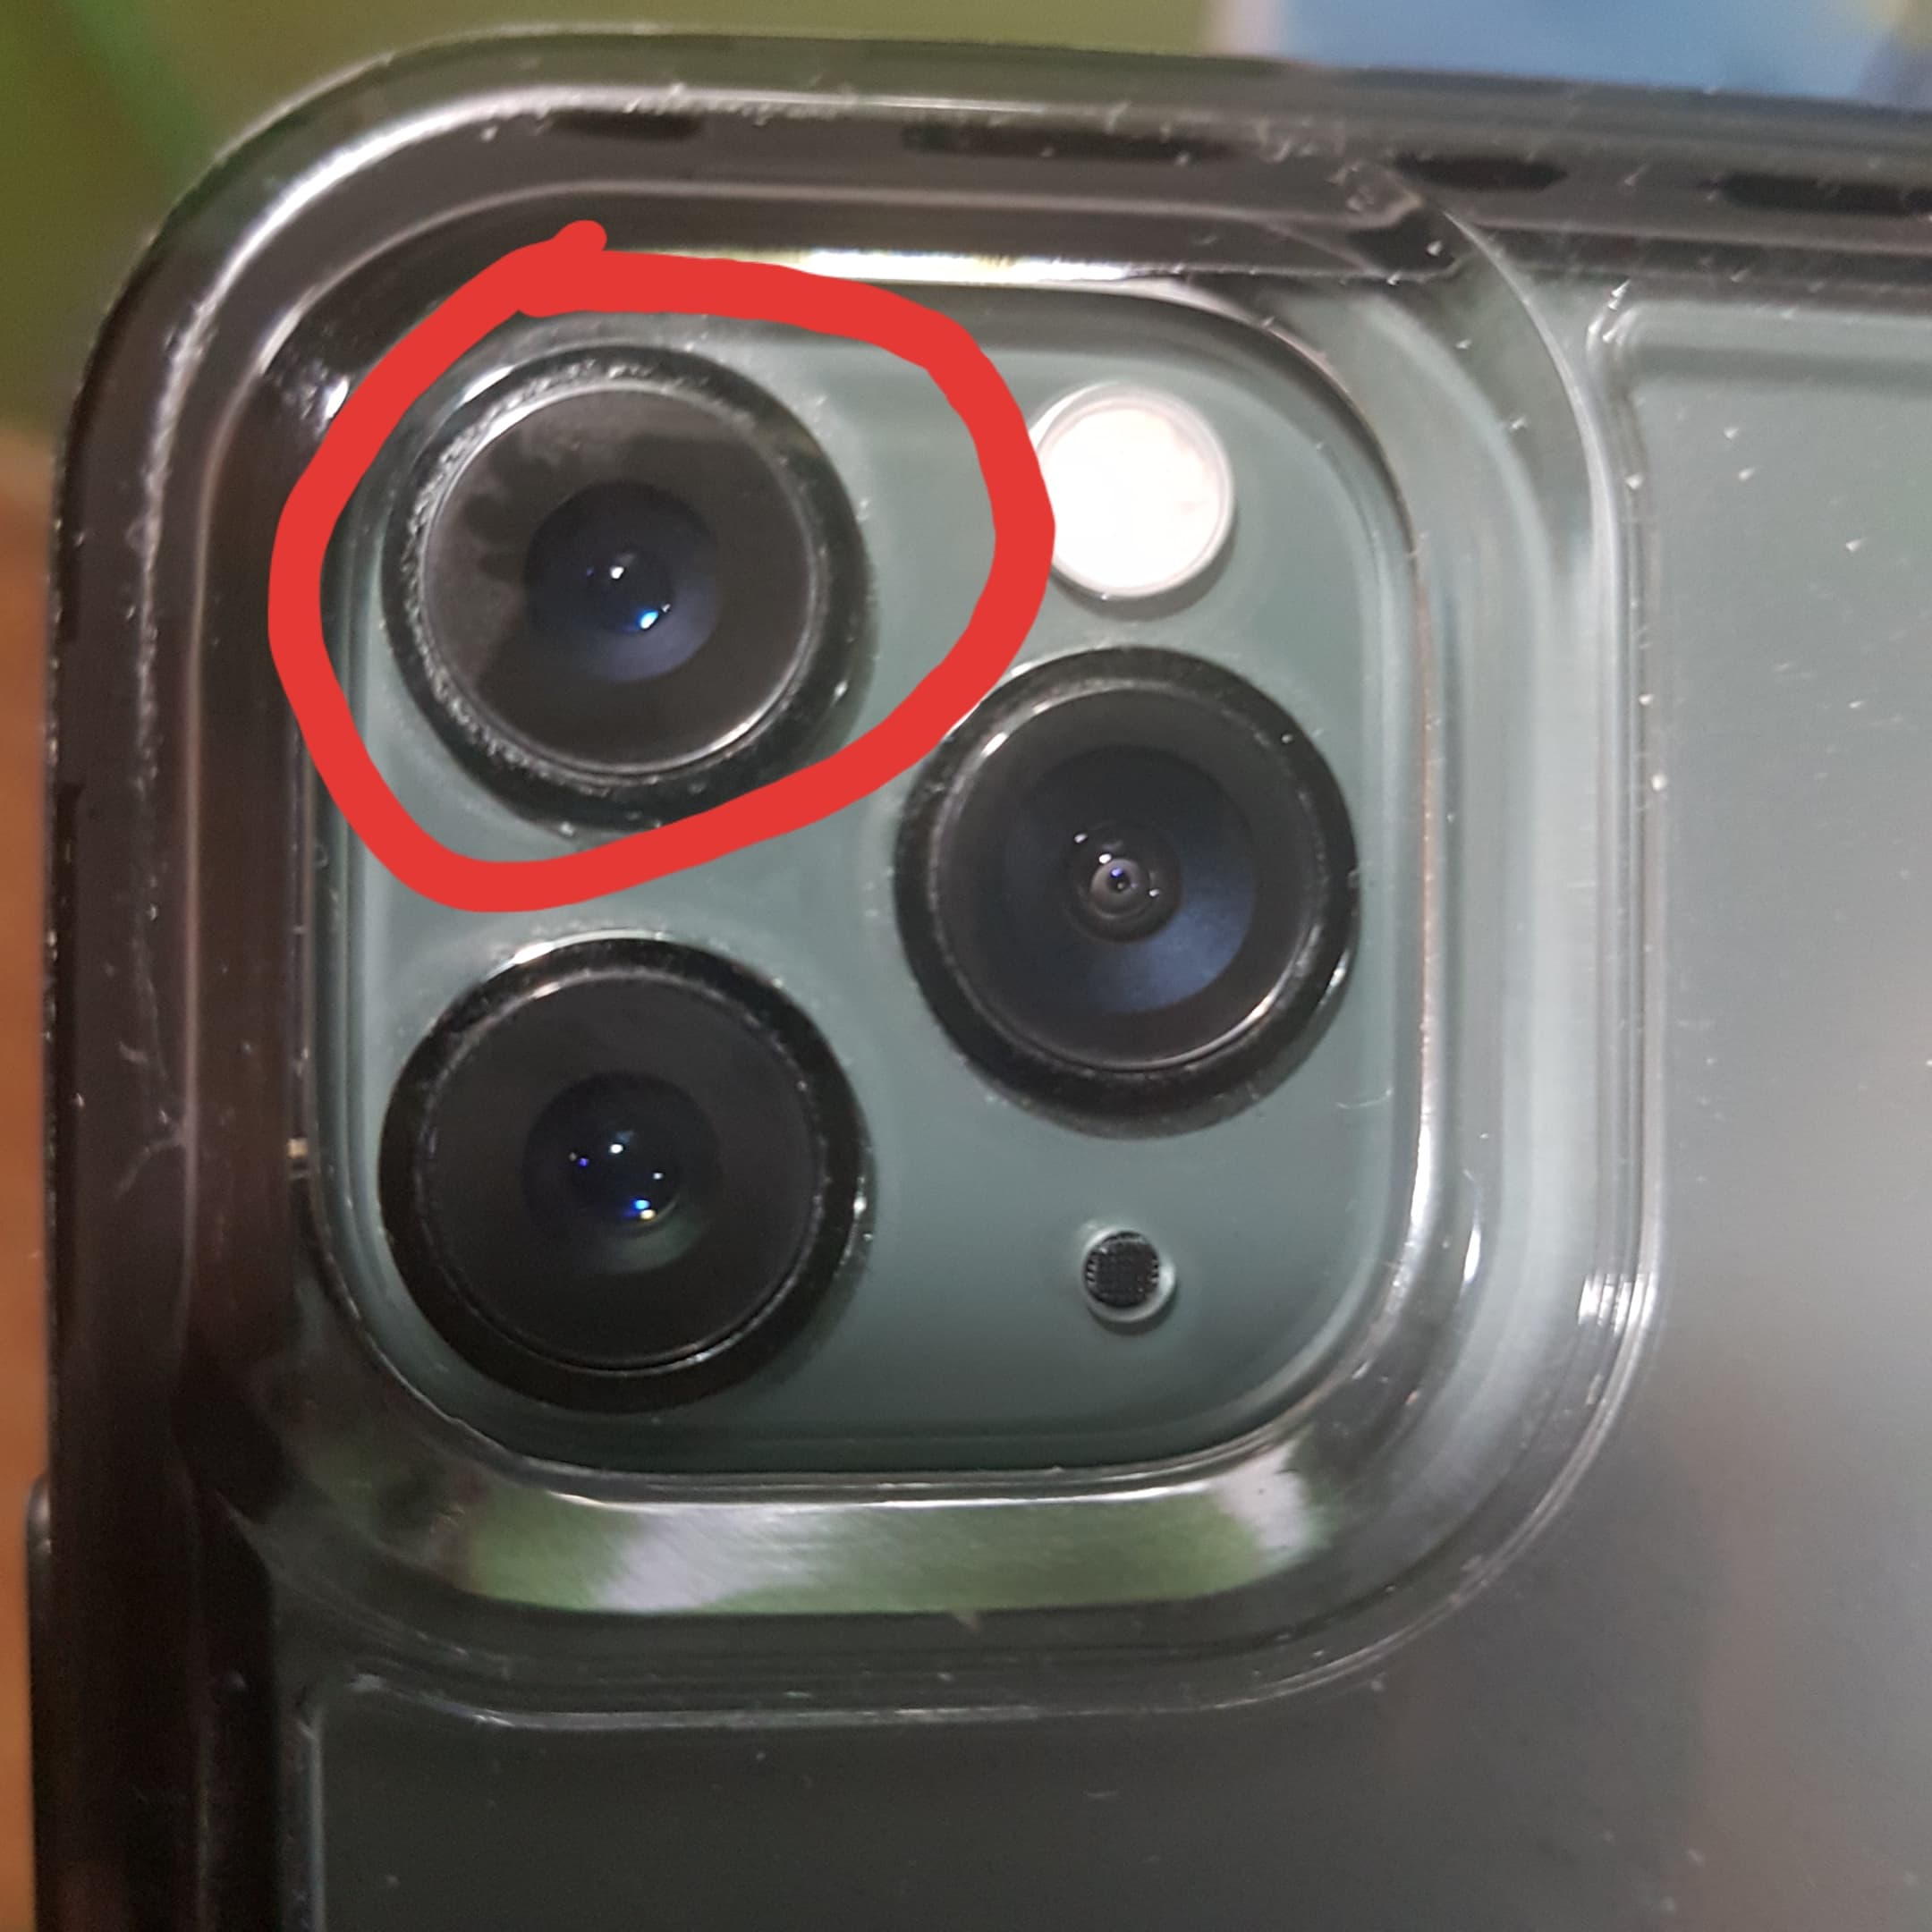 Is iPhone camera scratch proof?